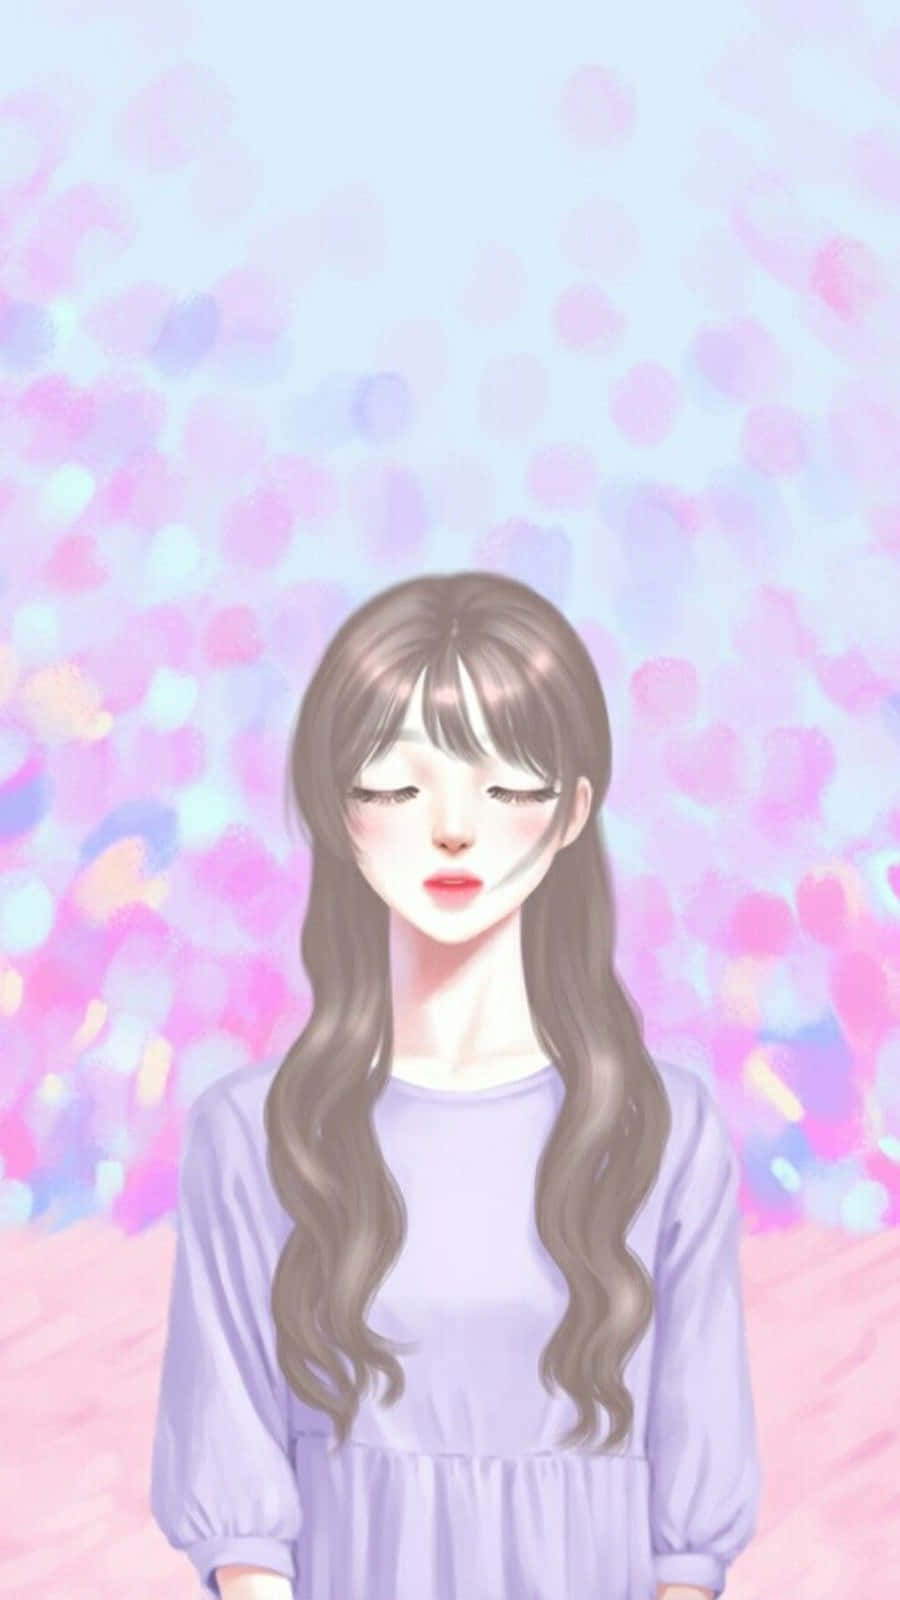 Korean Anime Girl Wearing Lavender Top Wallpaper